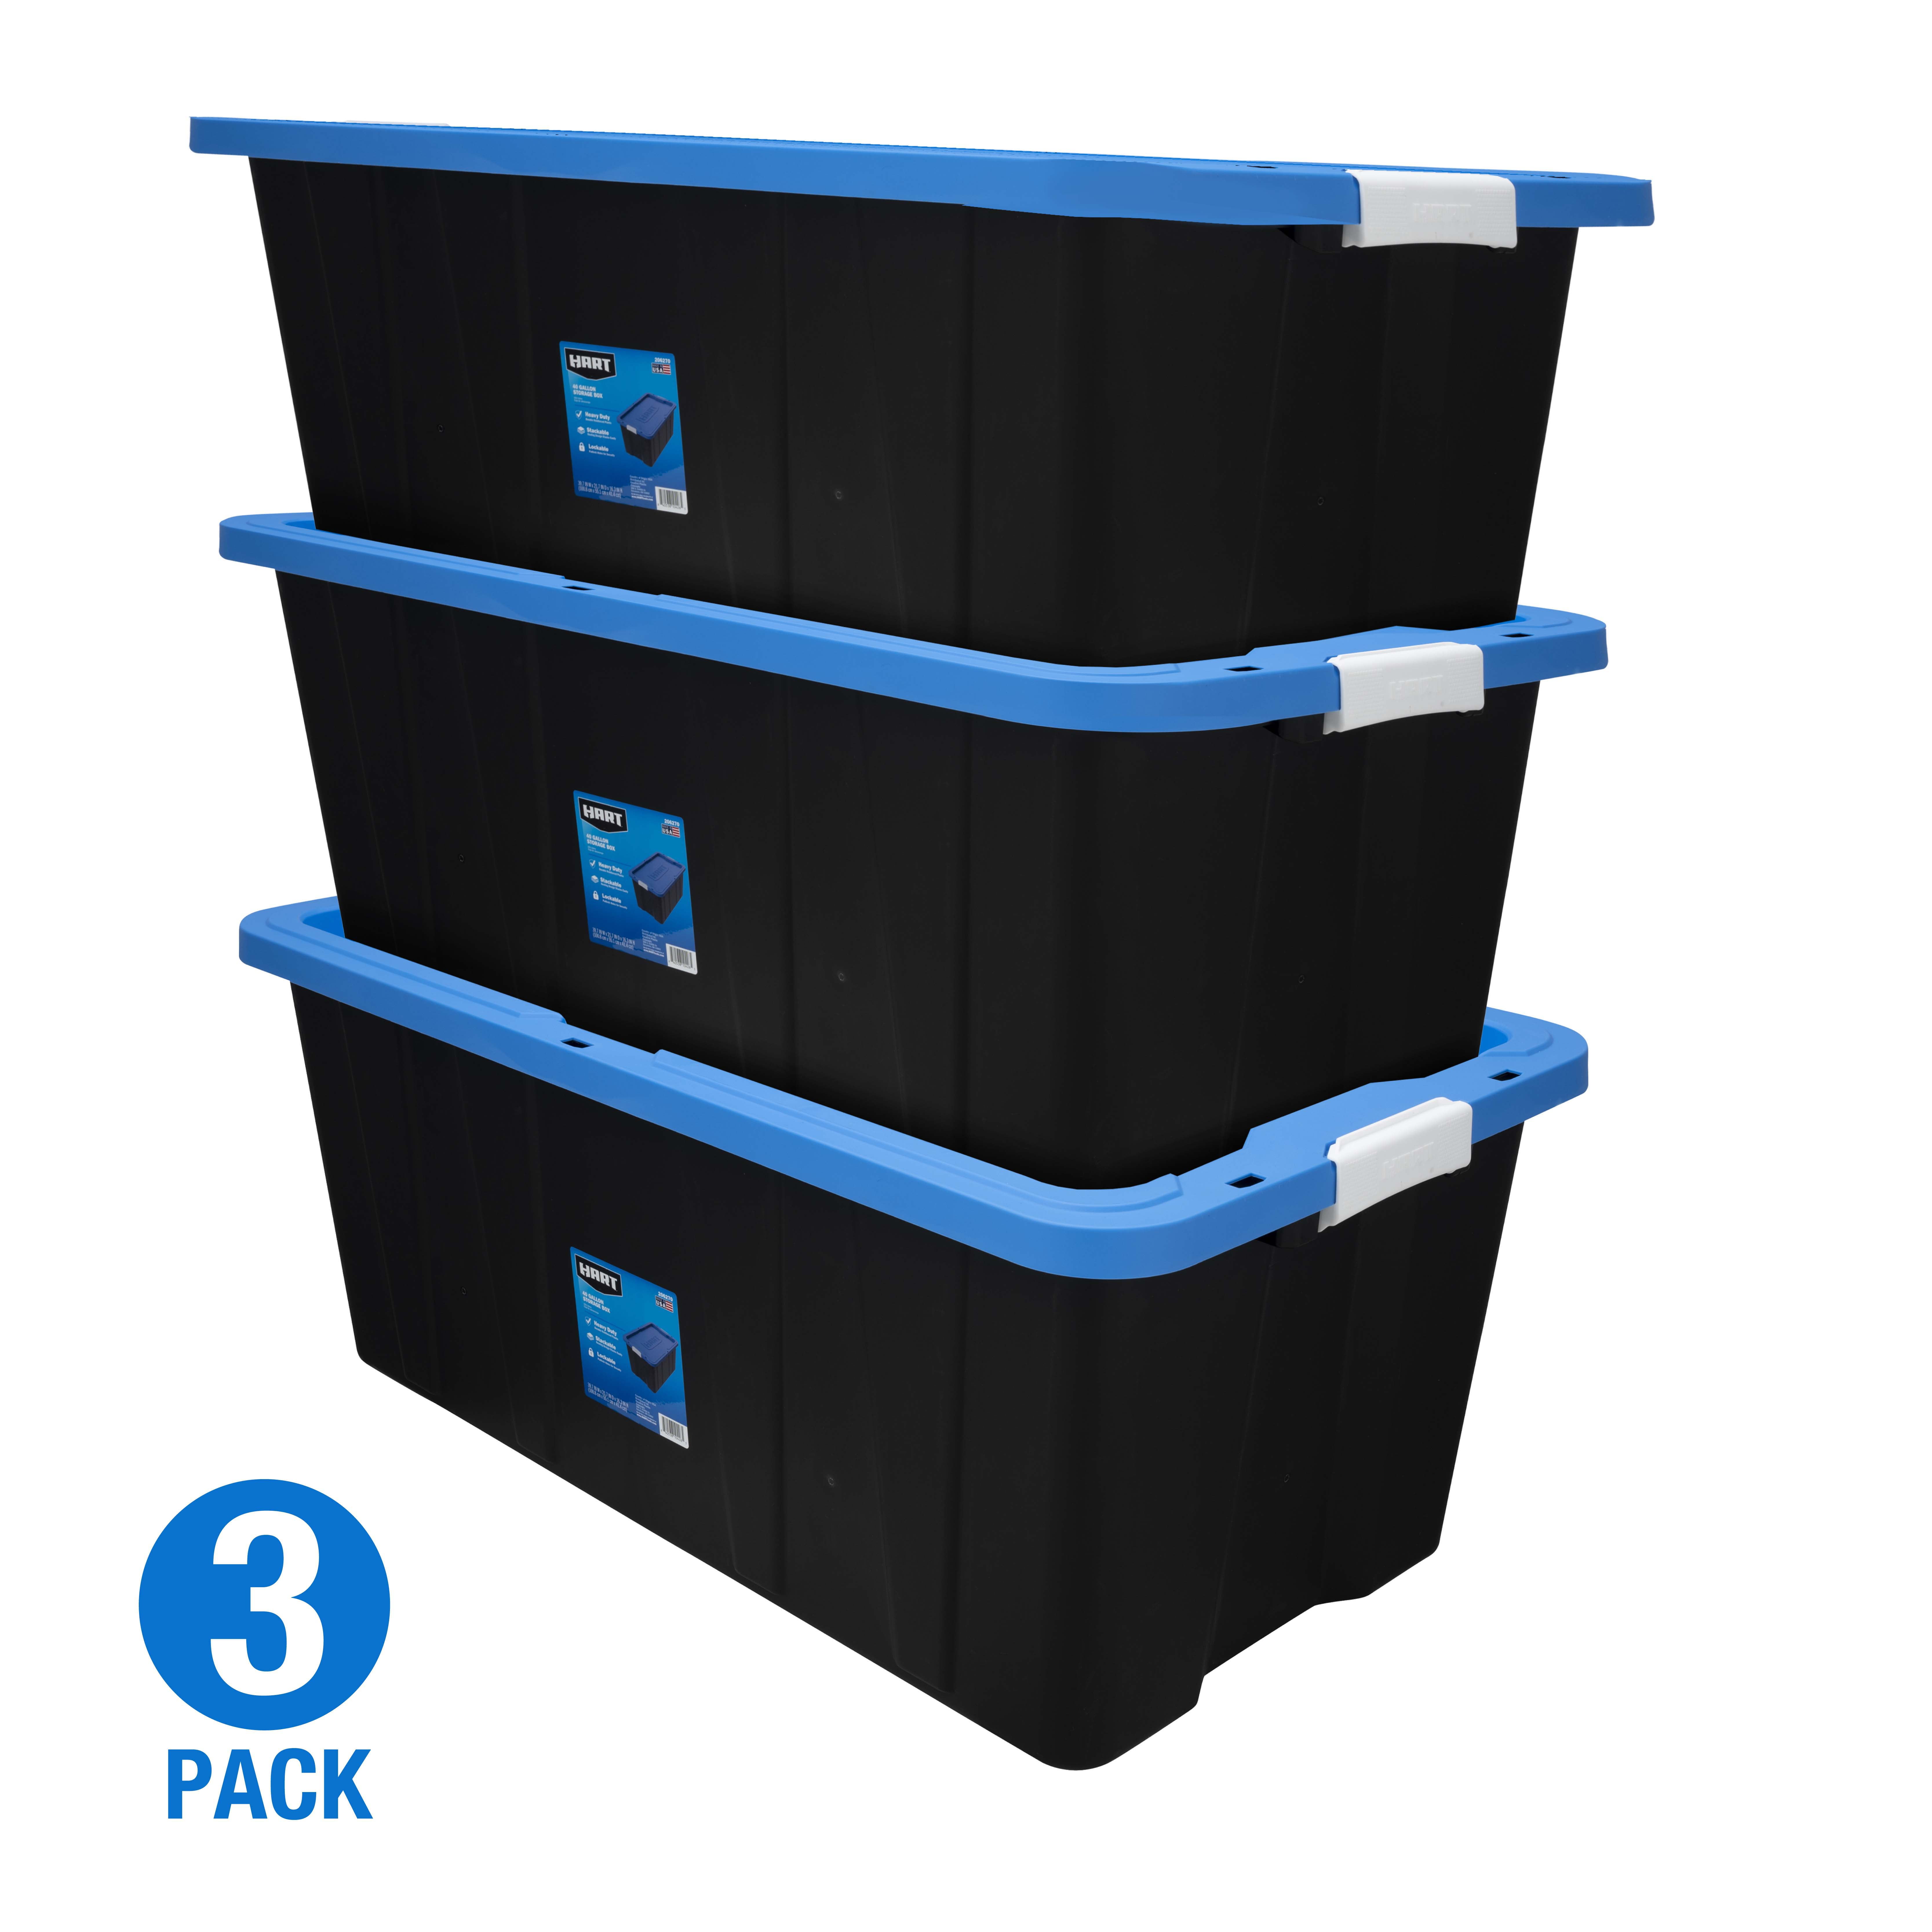 Hart - 27 Gallon Heavy Duty Latching Plastic Storage Bin, Black Base/Blue Lid, Set of 4